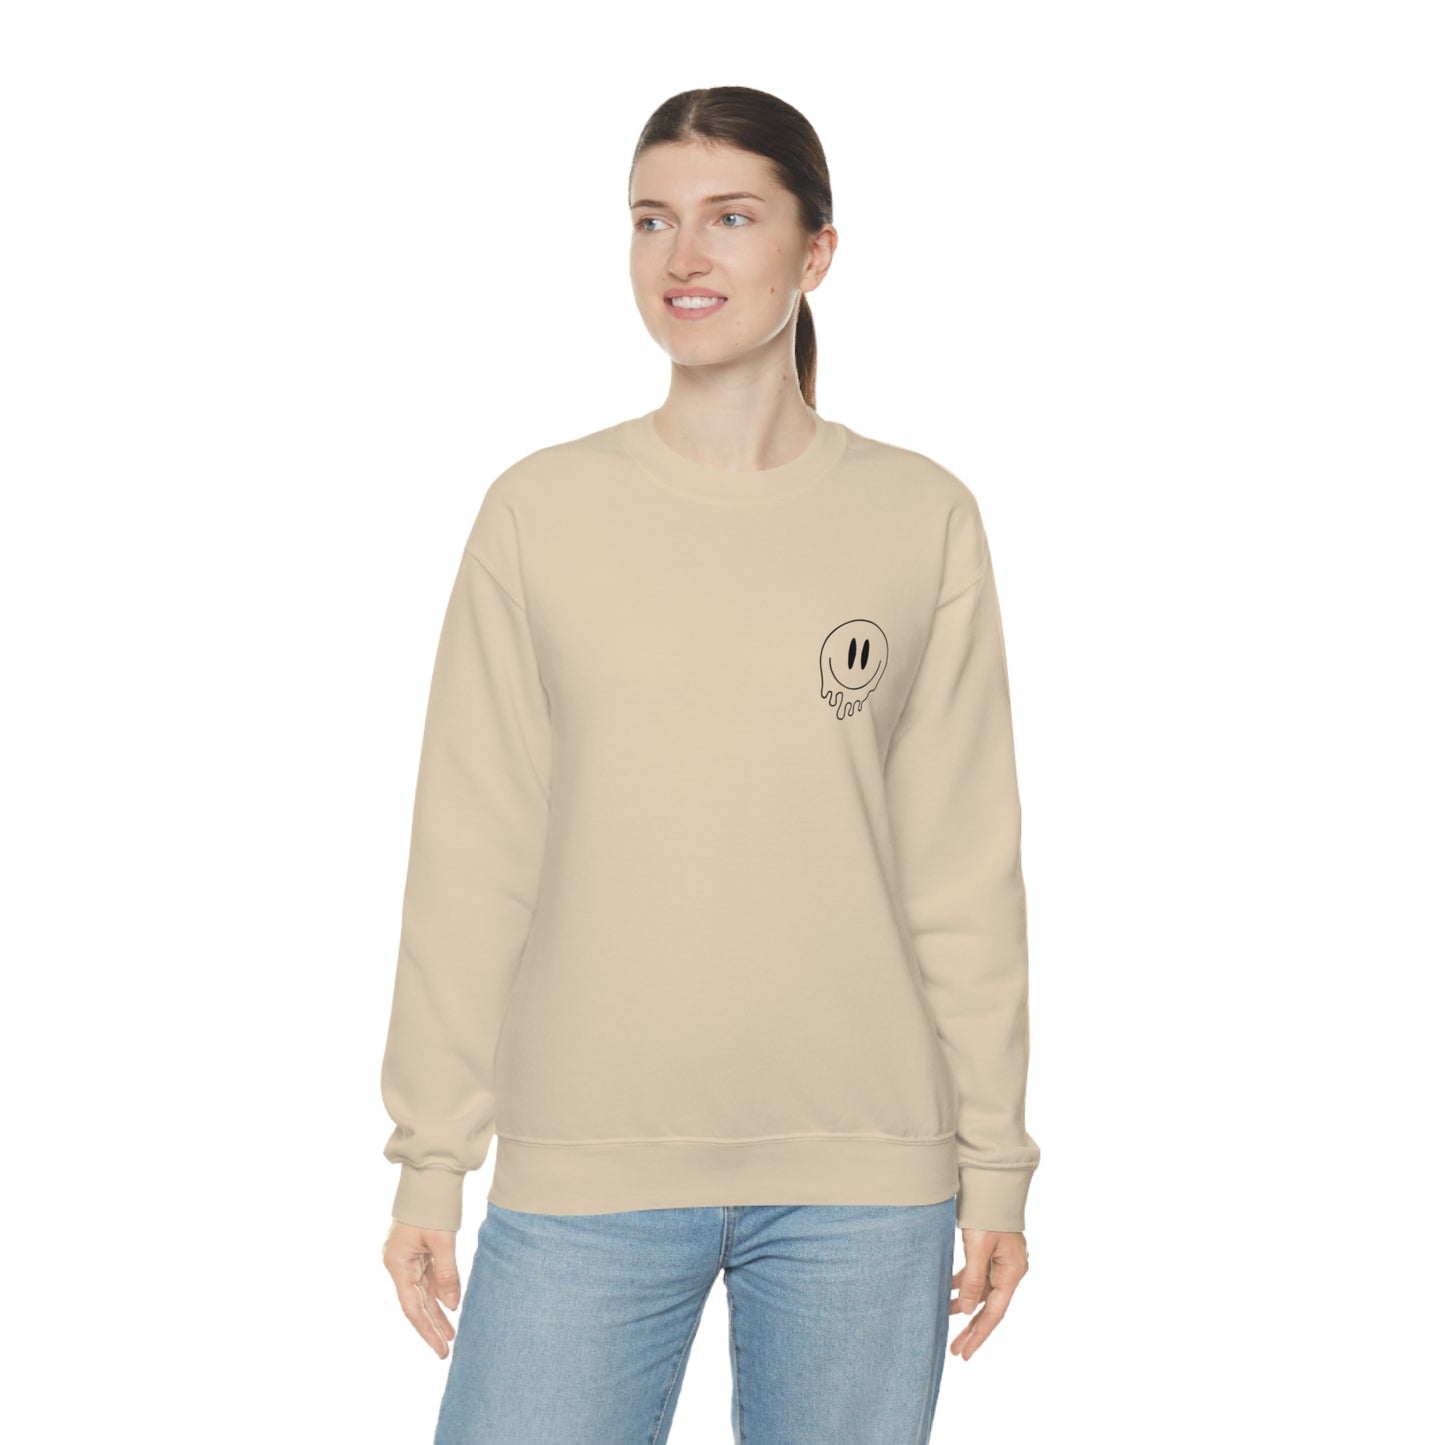 Melting Smiley Tired Moms Club Unisex DryBlend® Crewneck Sweatshirt Front/Back Print